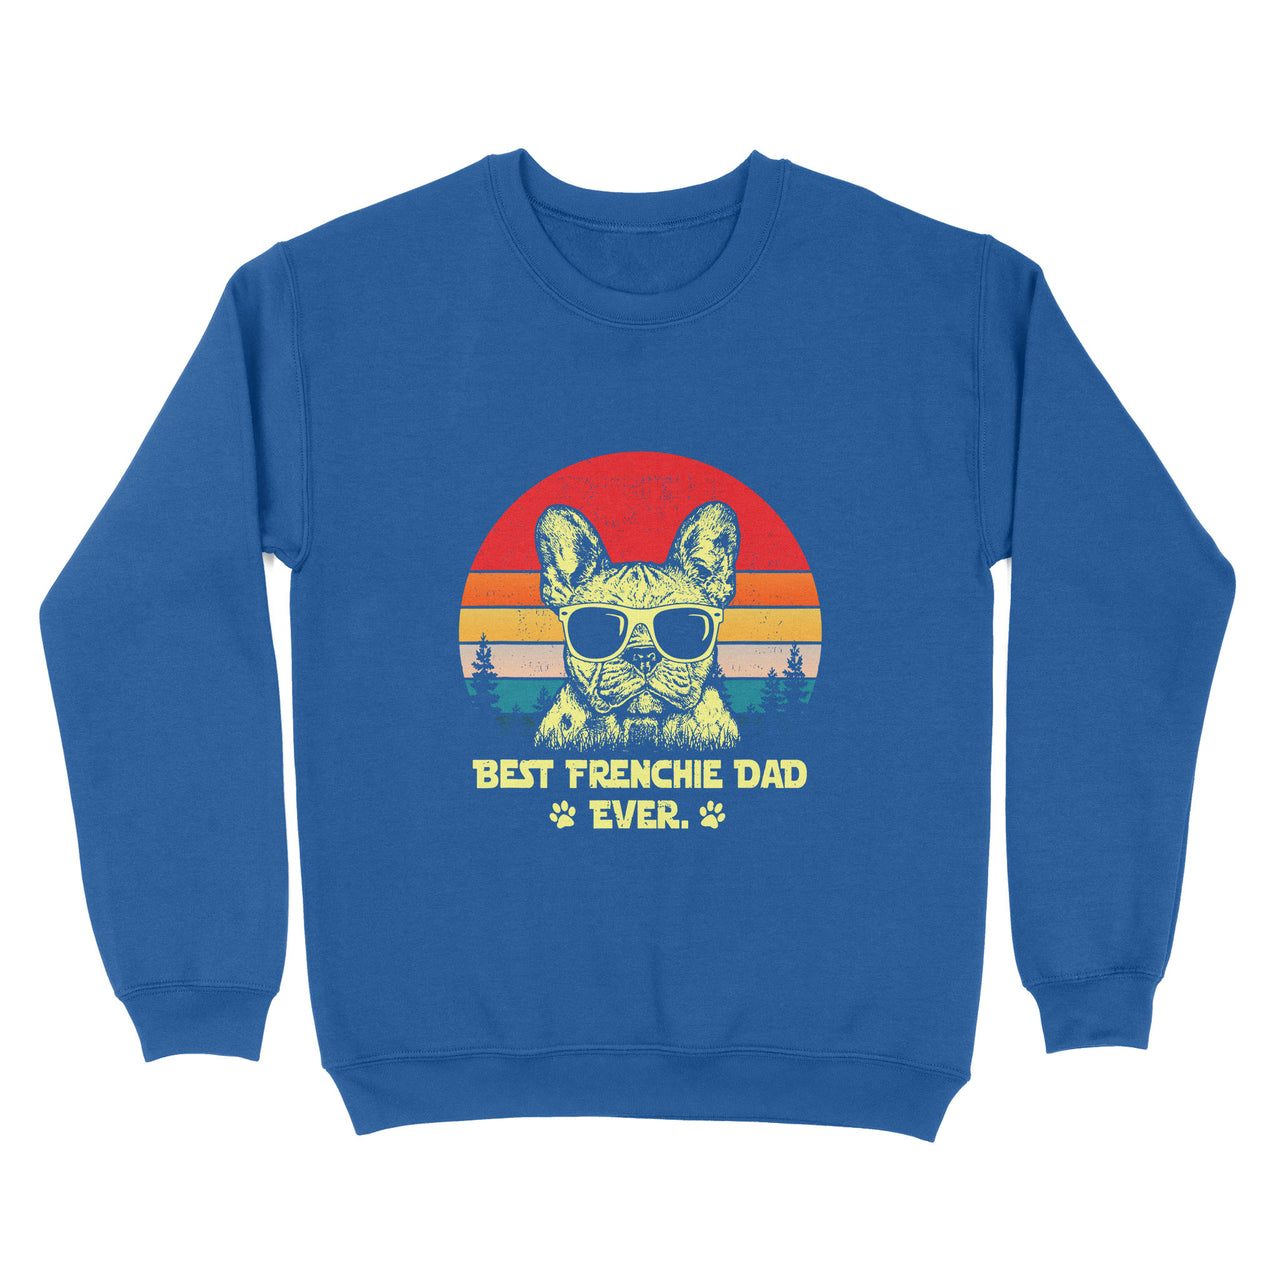 Retro Gift For Frenchie Lover - Best Frenchie Dad - Standard Crew Neck Sweatshirt